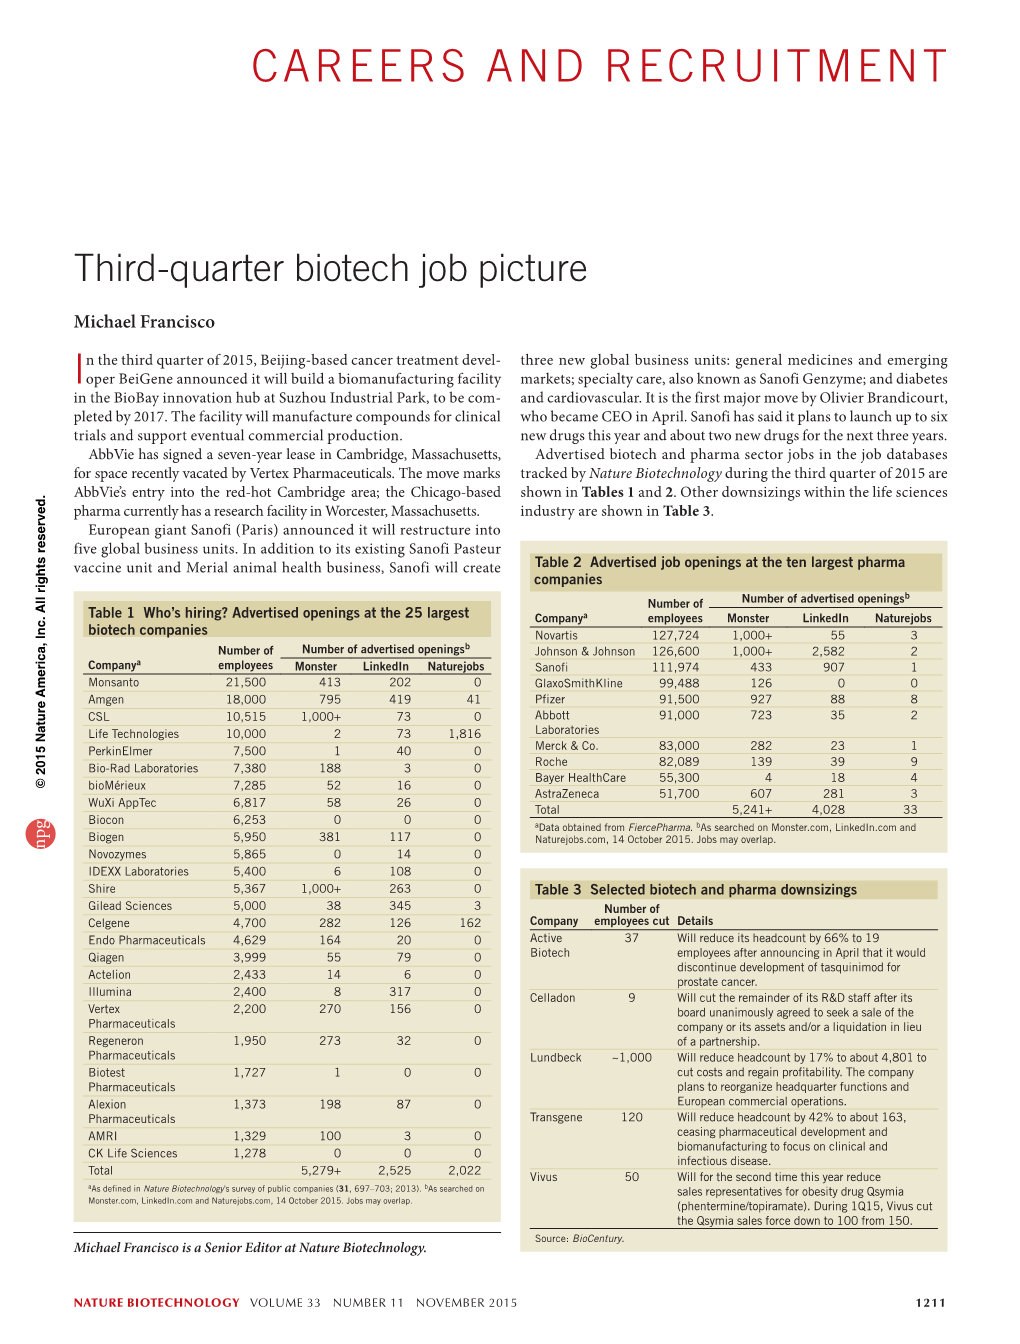 Third-Quarter Biotech Job Picture